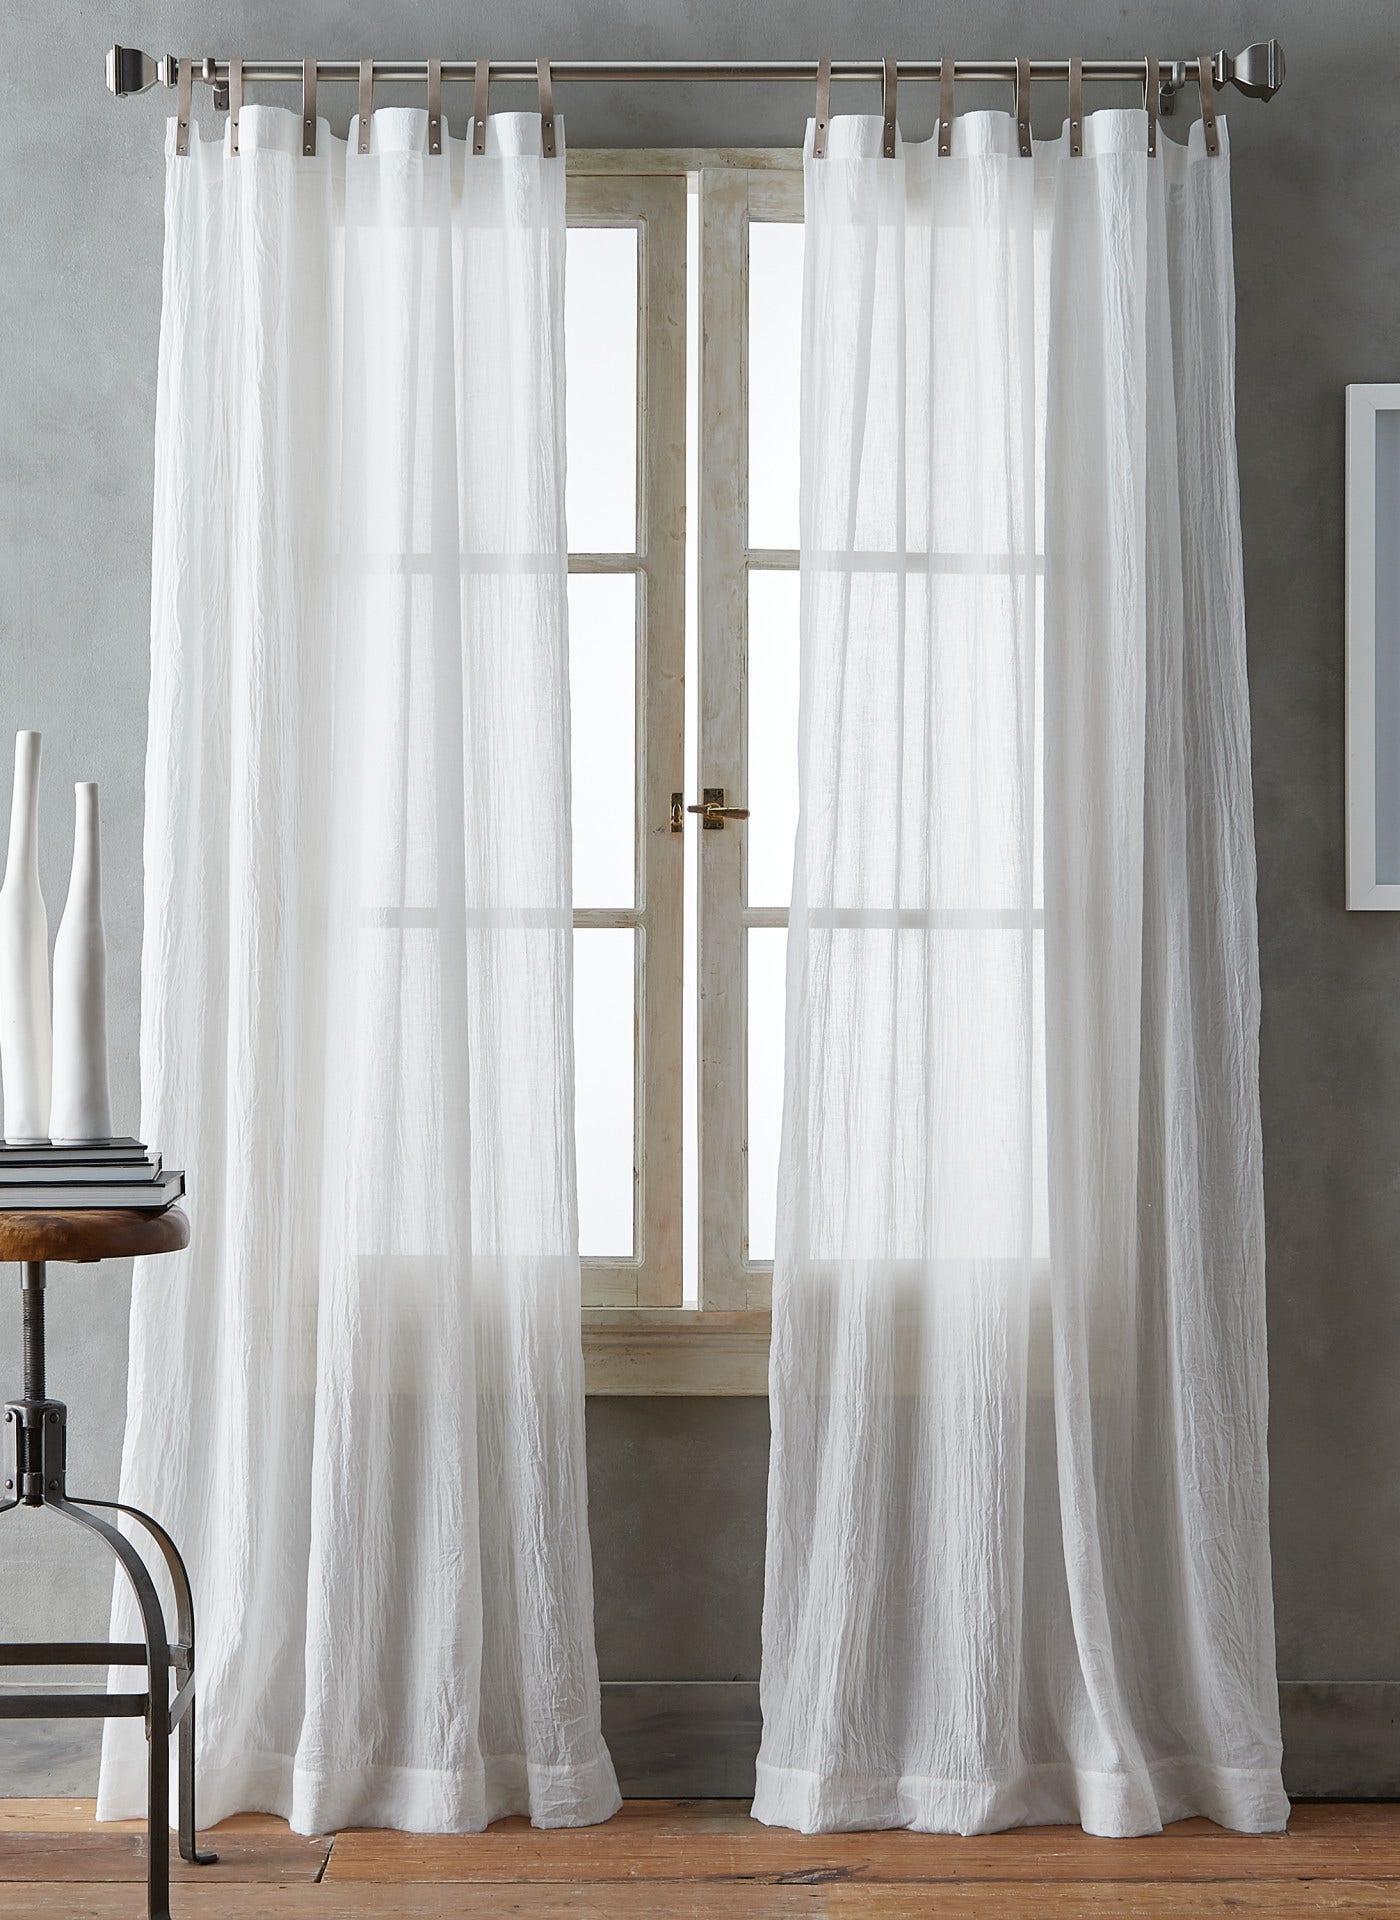 DKNY City Breeze White Window Panel Curtains Size 50 X 84